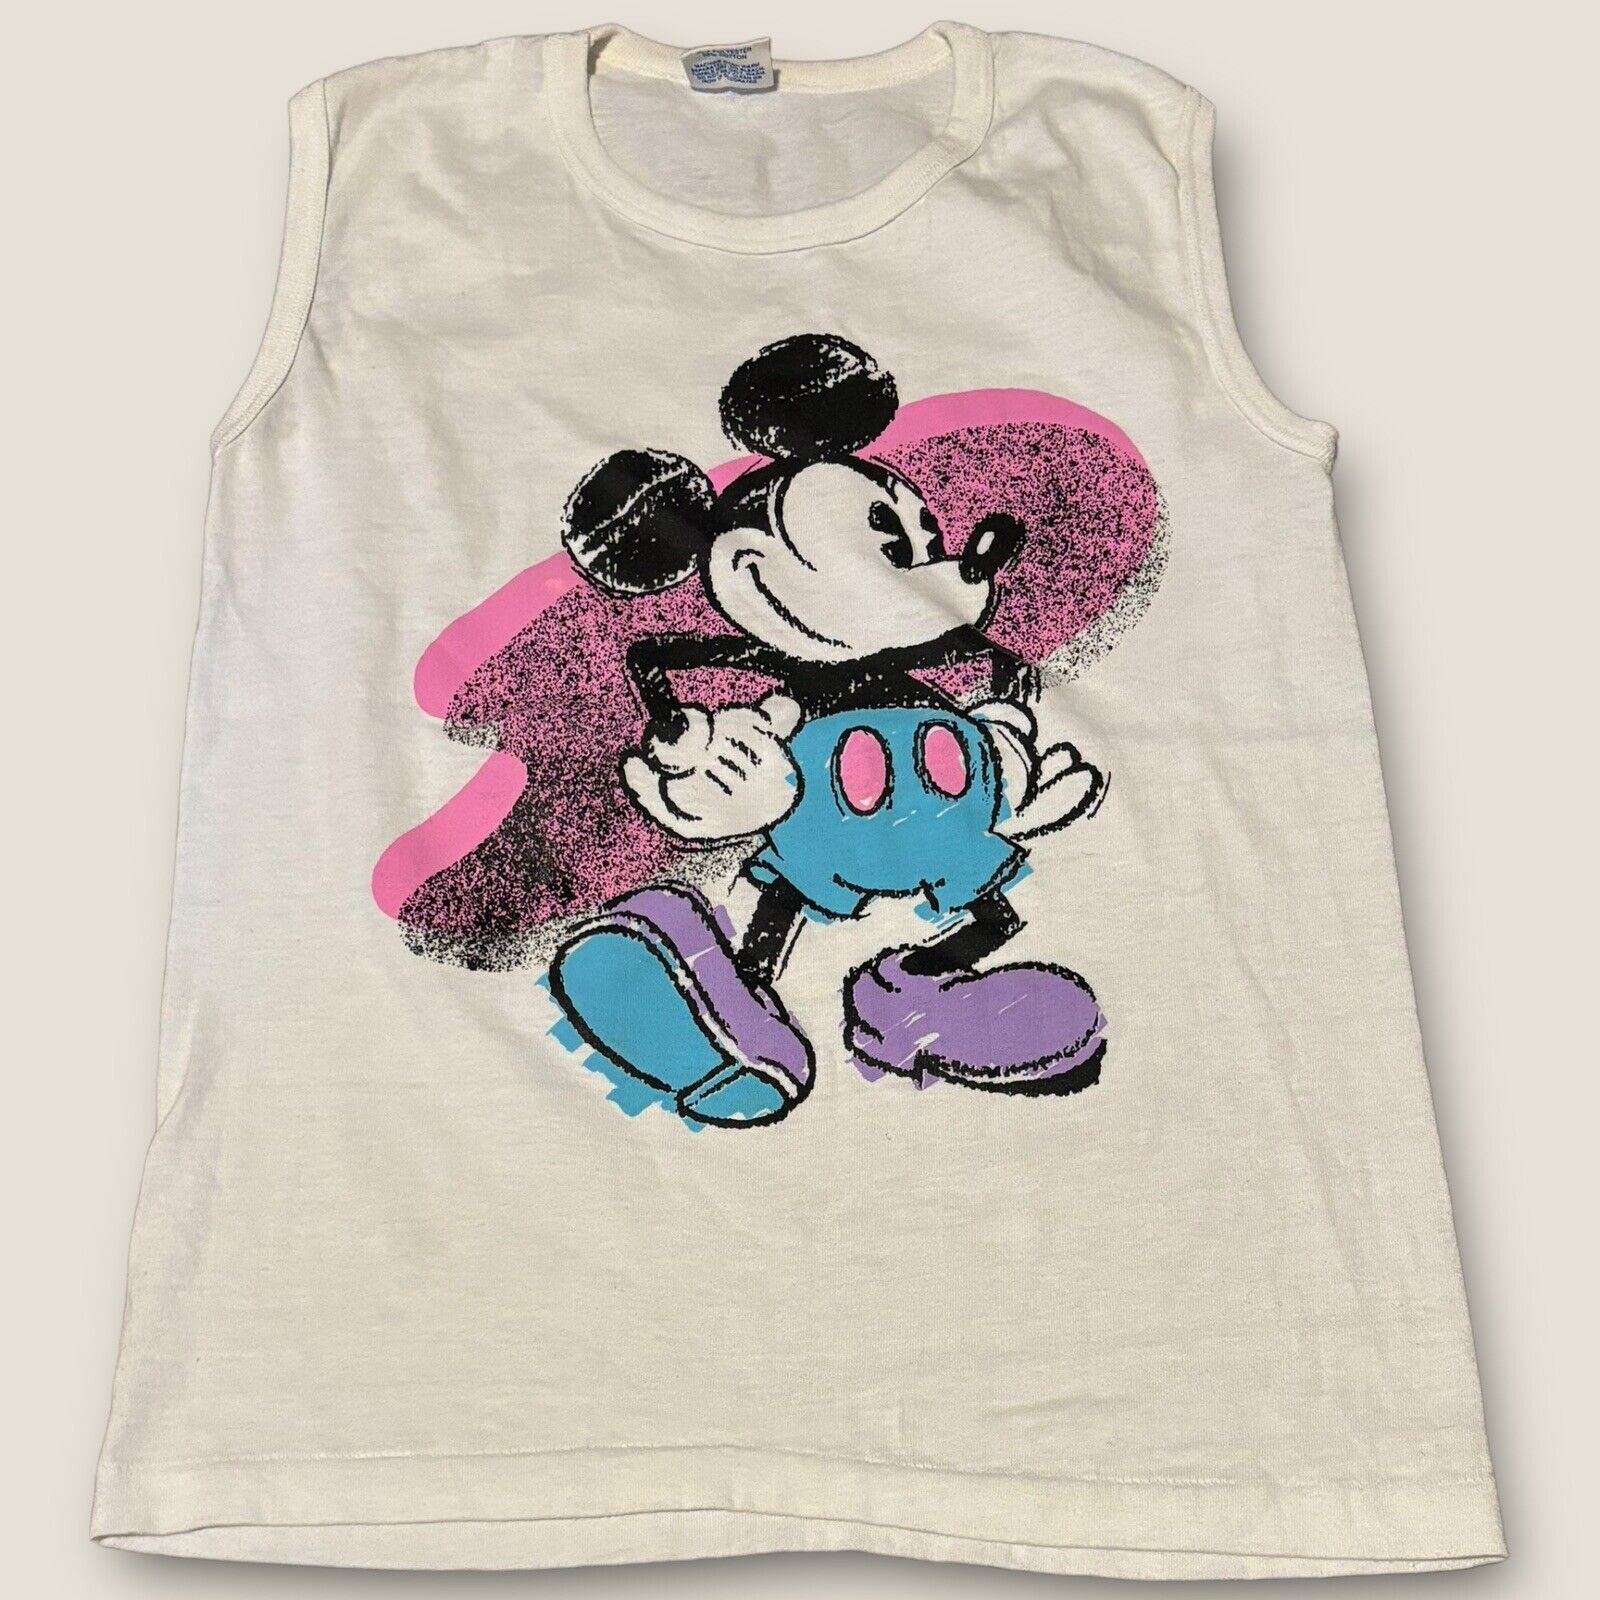 Vintage 1980’s Original Disney Mickey Mouse White Tank Top Shirt Women’s Small